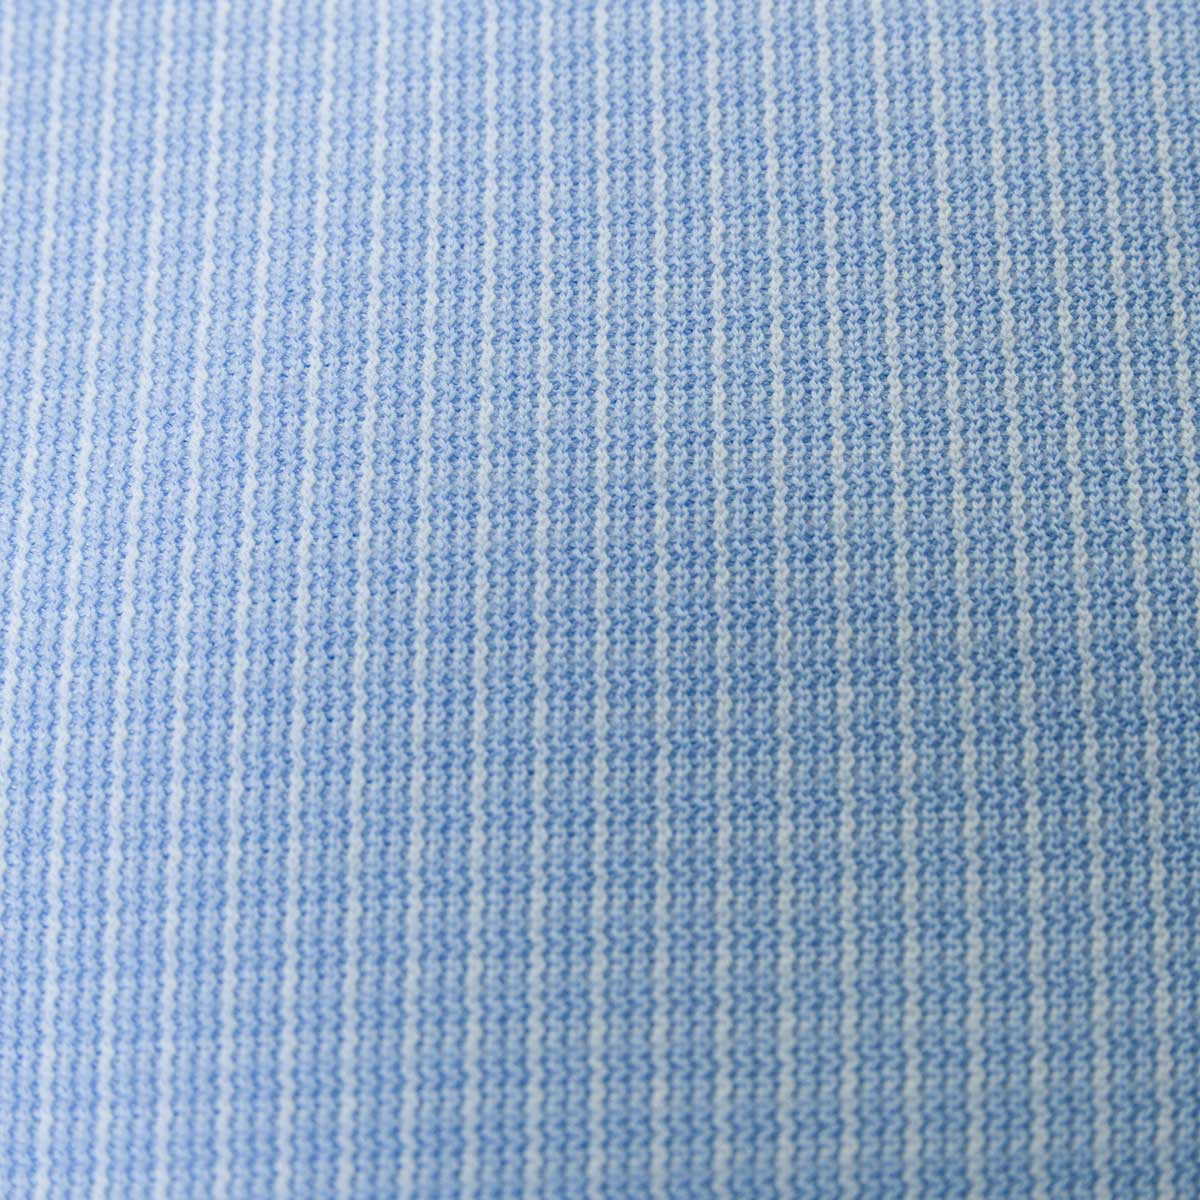 SHIRT HOUSE・ブルーレーベル 半袖 ニットシャツ(裄詰不可)ボタンダウン ブルー ワイシャツ